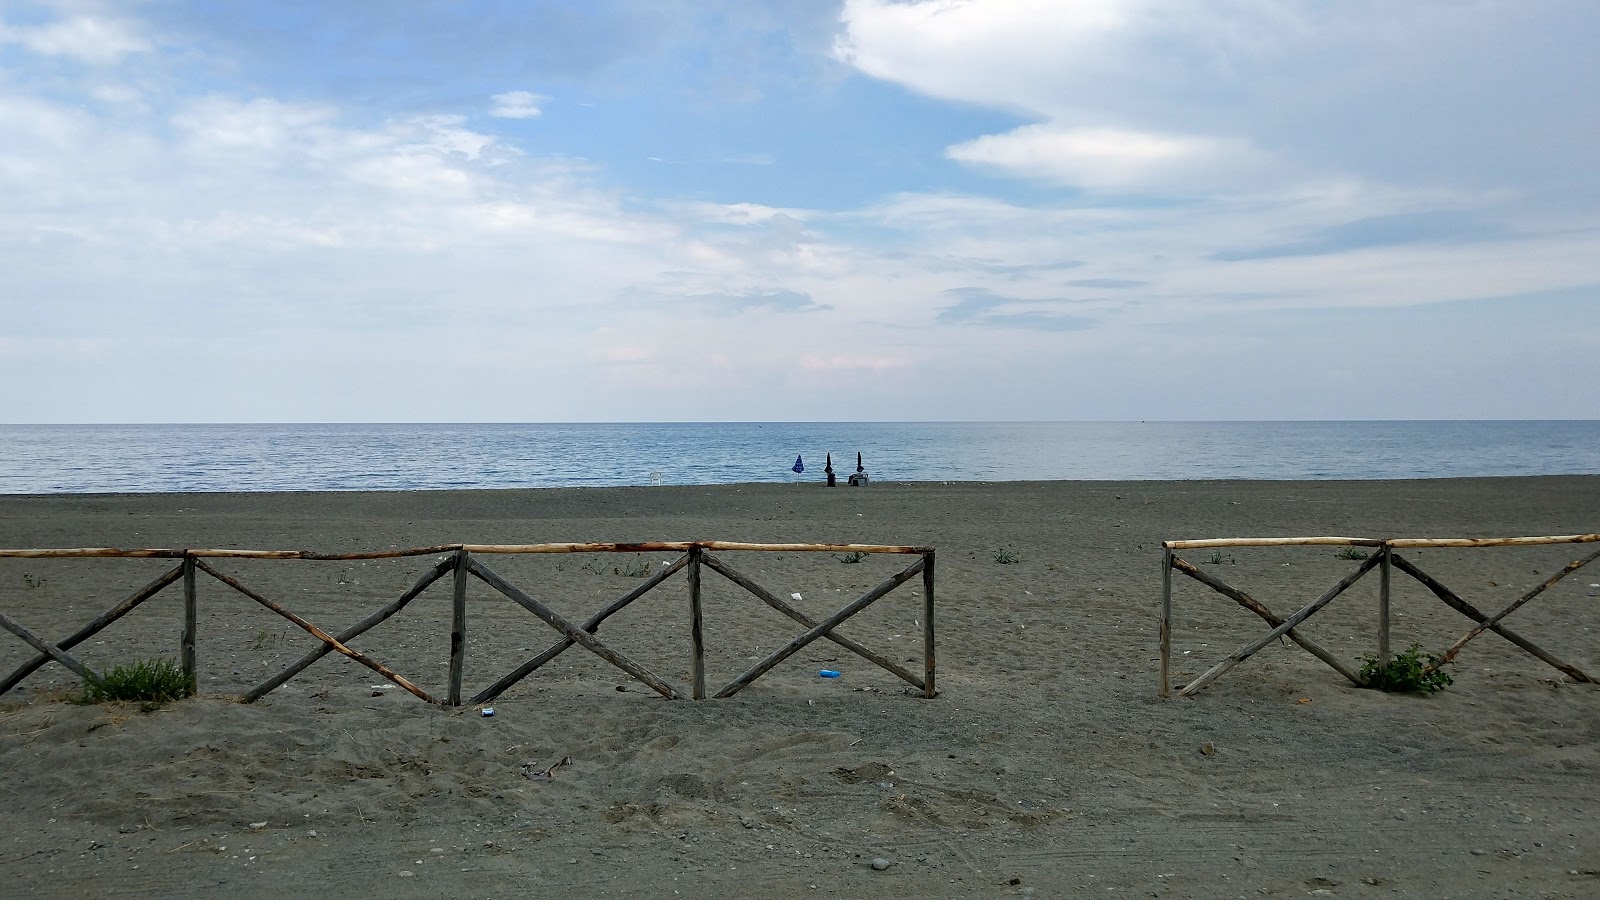 Foto de Spiaggia di Marinella com baixo nível de limpeza